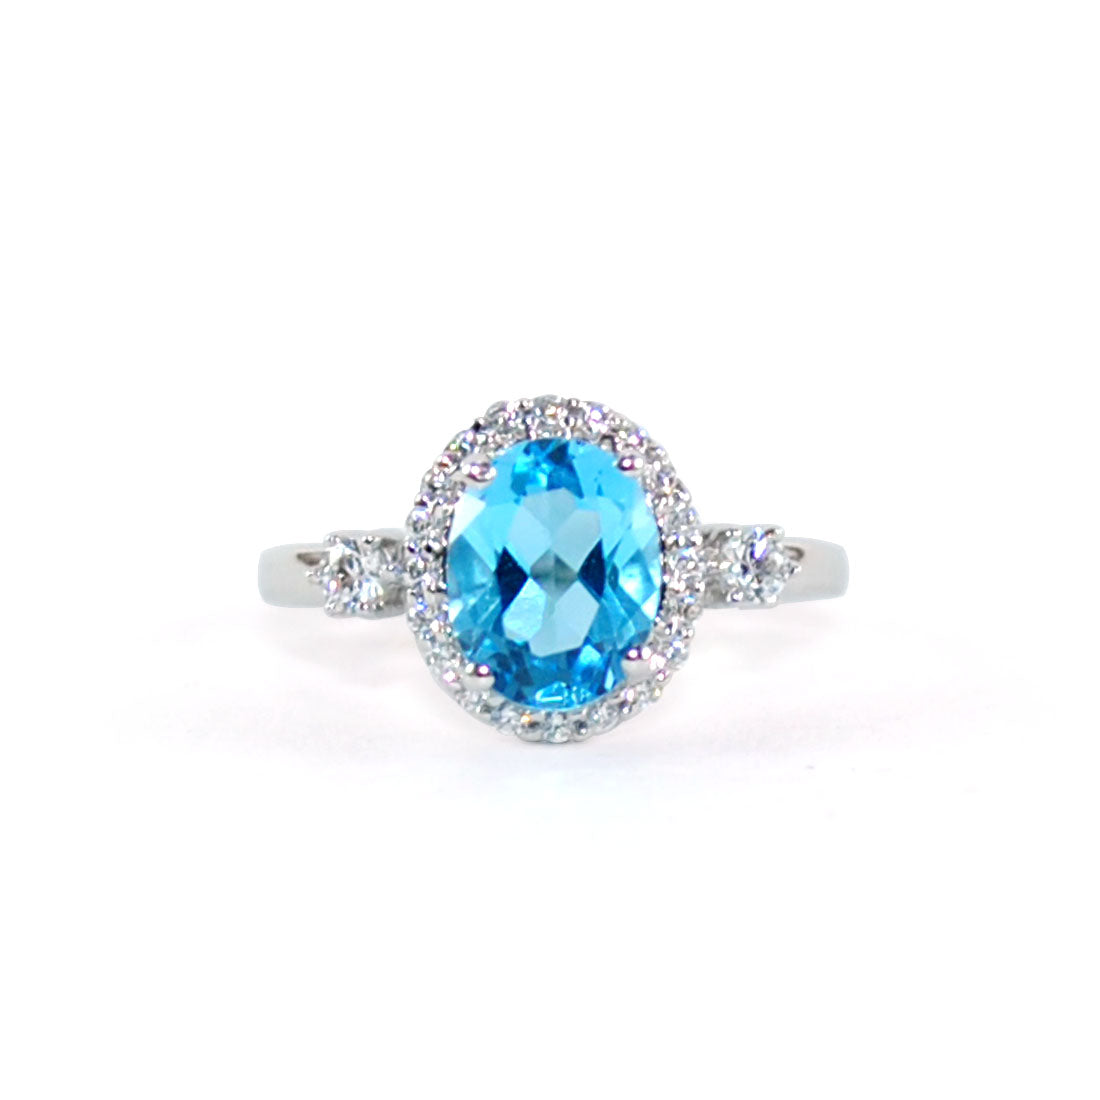 Oval Aquamarine with Diamond Halo Engagement Ring